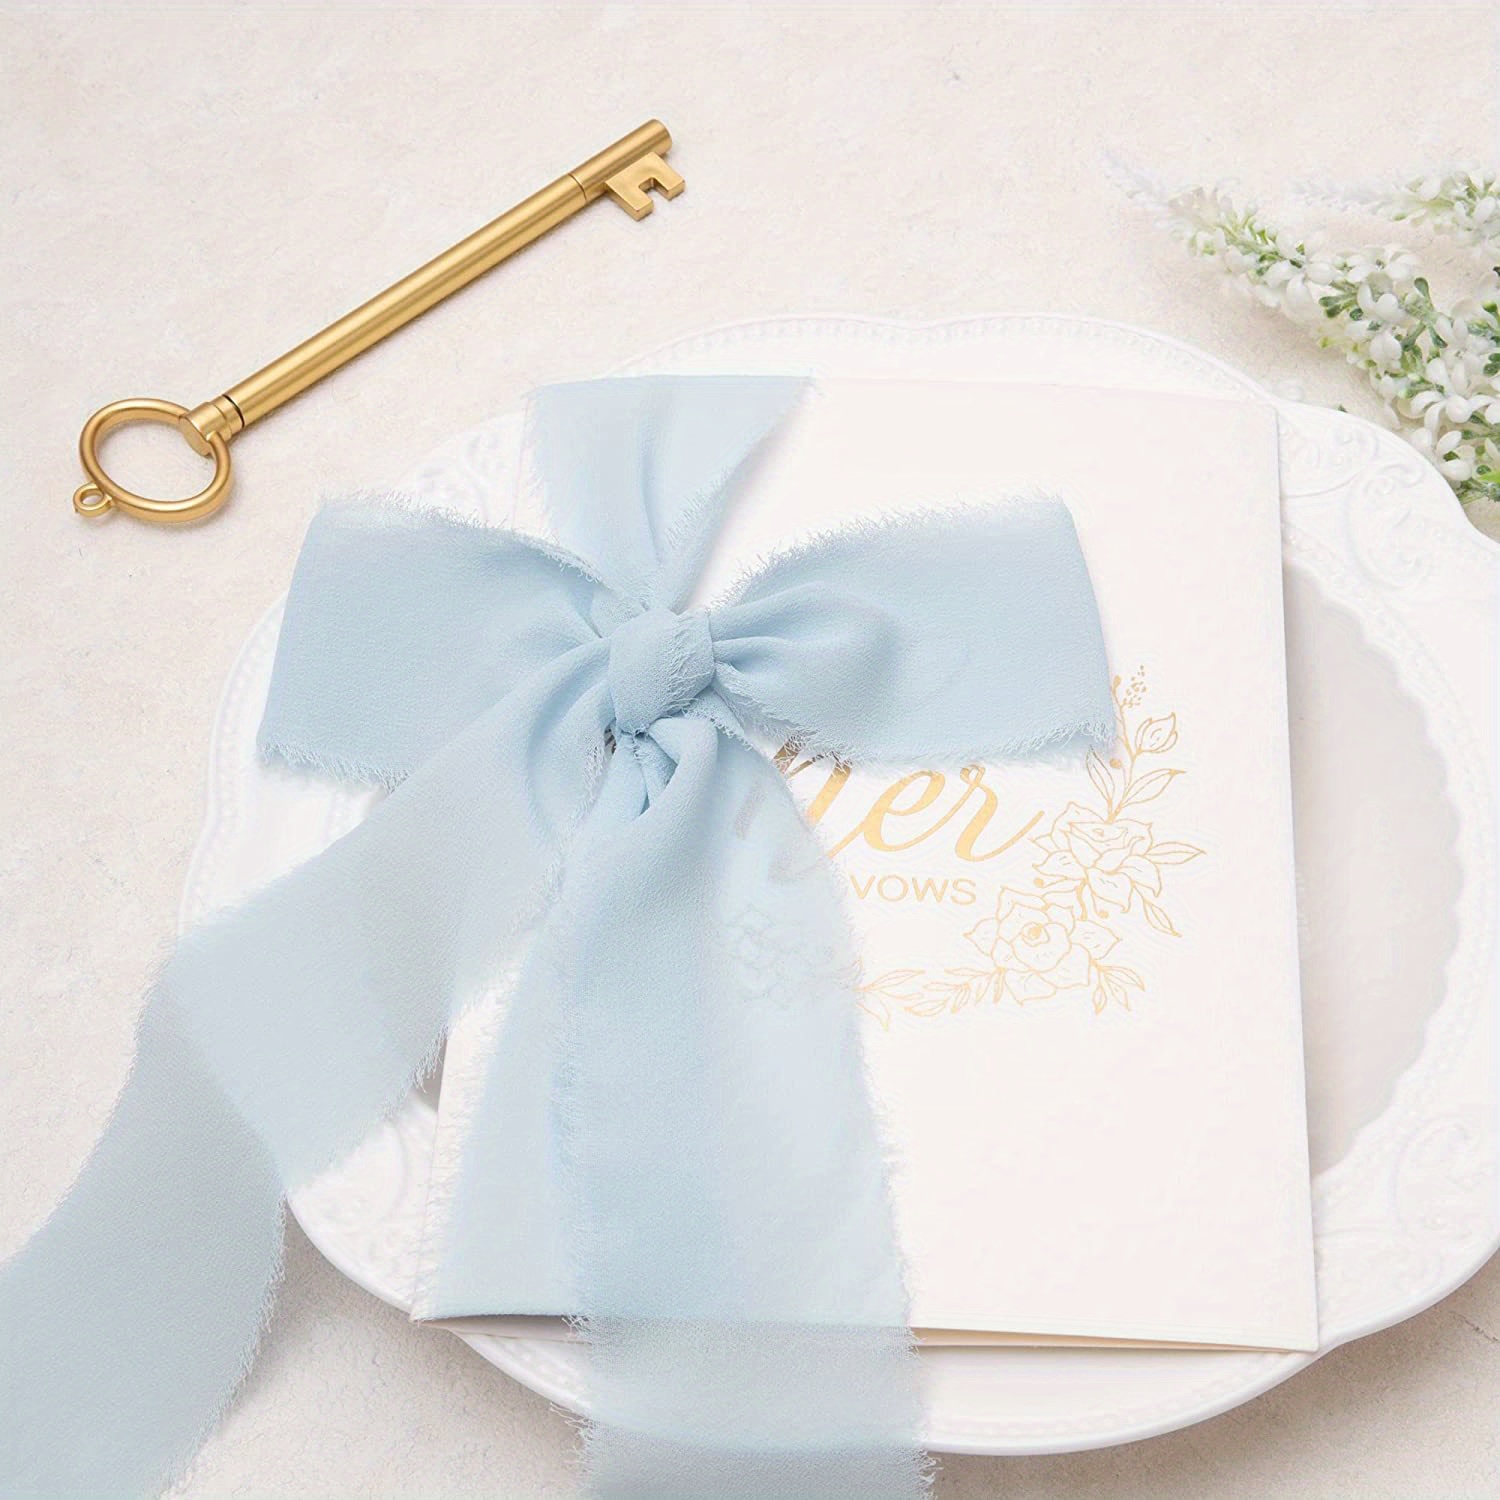 5 M Per Roll Organza Ribbon Wavy Edge Rolls Sheer Chiffon Color Ribbons For  Gift Wrapping Wedding Invitations Bridal Bouquet